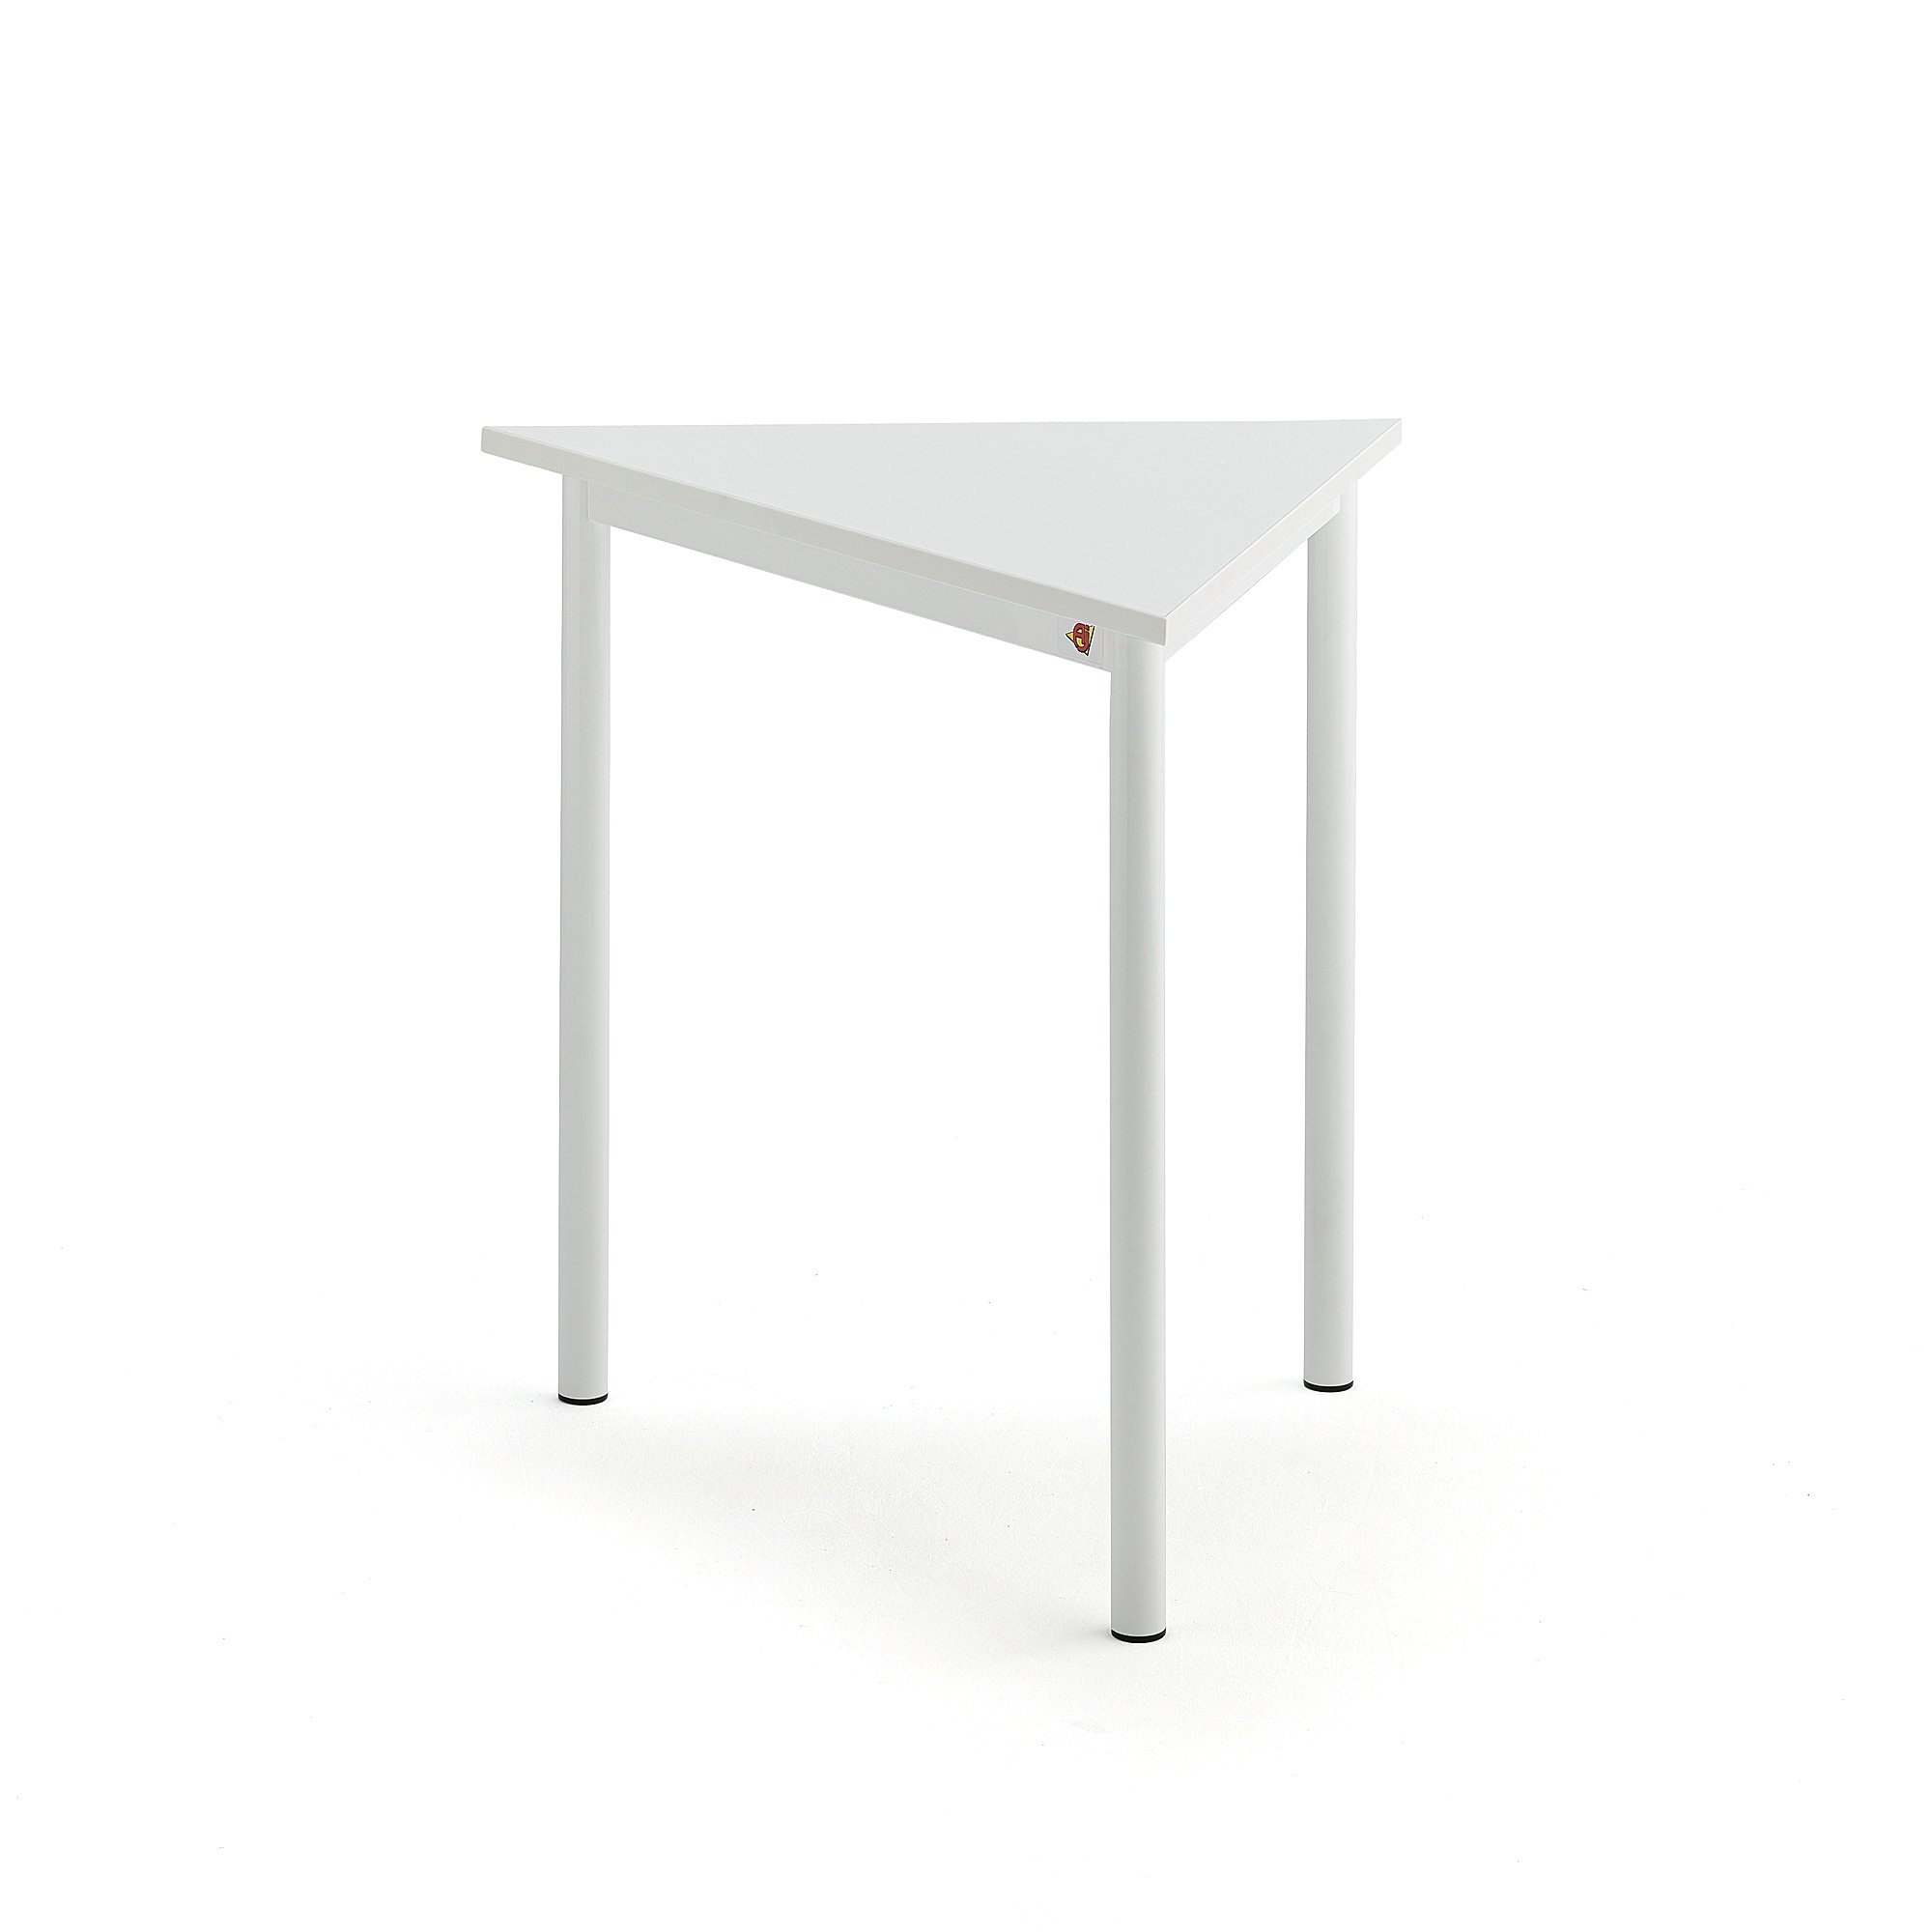 Stůl SONITUS TRIANGEL, 800x700x720 mm, bílé nohy, HPL deska tlumící hluk, bílá